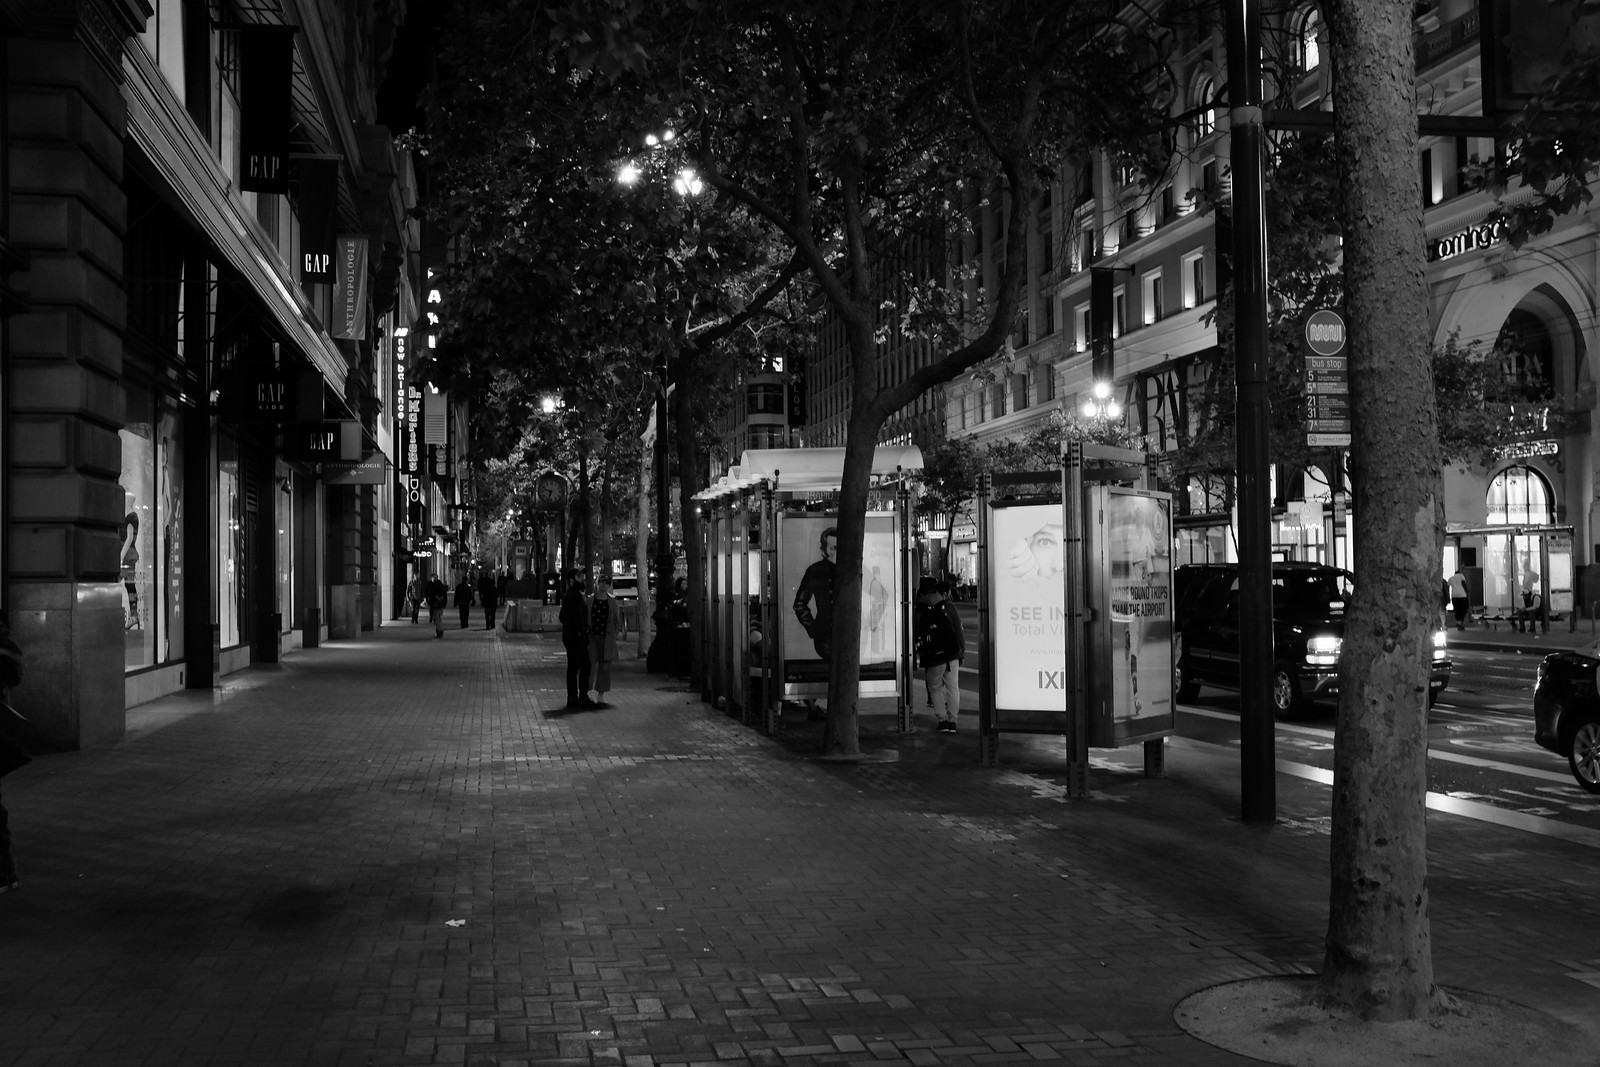 The San Francisco Night photo by FUJIFILM X100S.